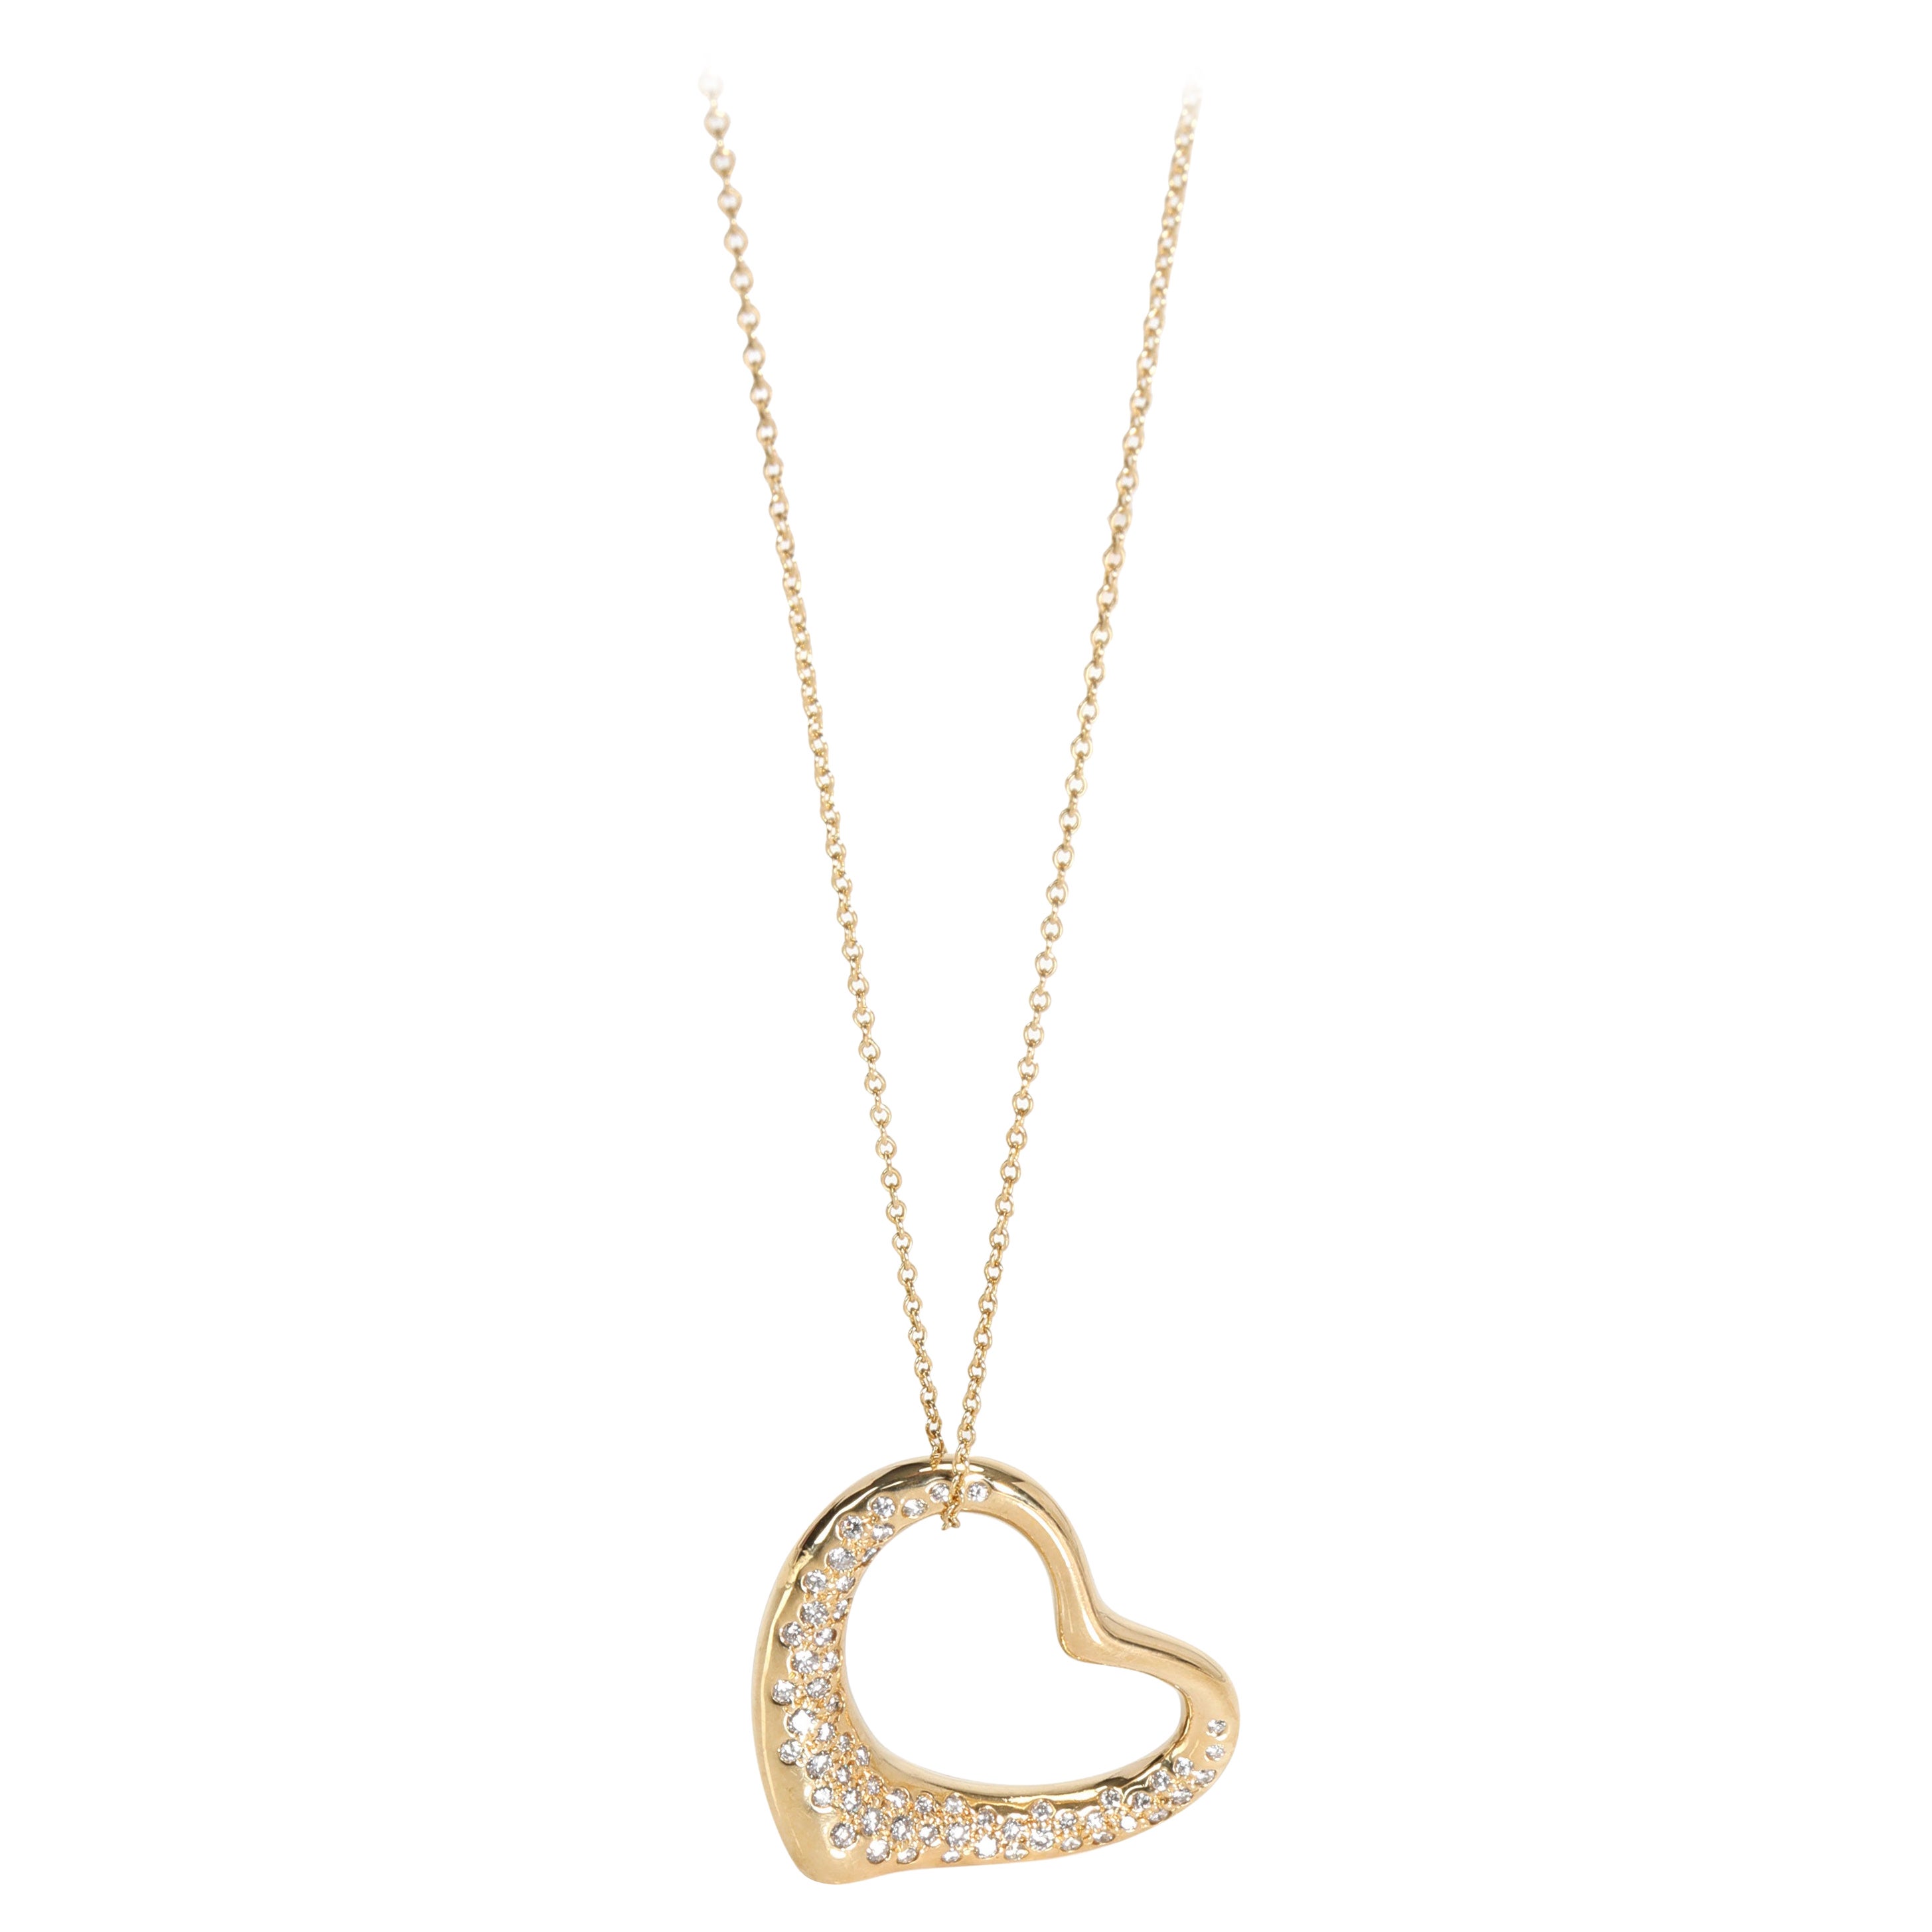 Tiffany & Co. Elsa Peretti Pendentif en forme de cœur ouvert en or jaune 18 carats avec diamants 1 carat